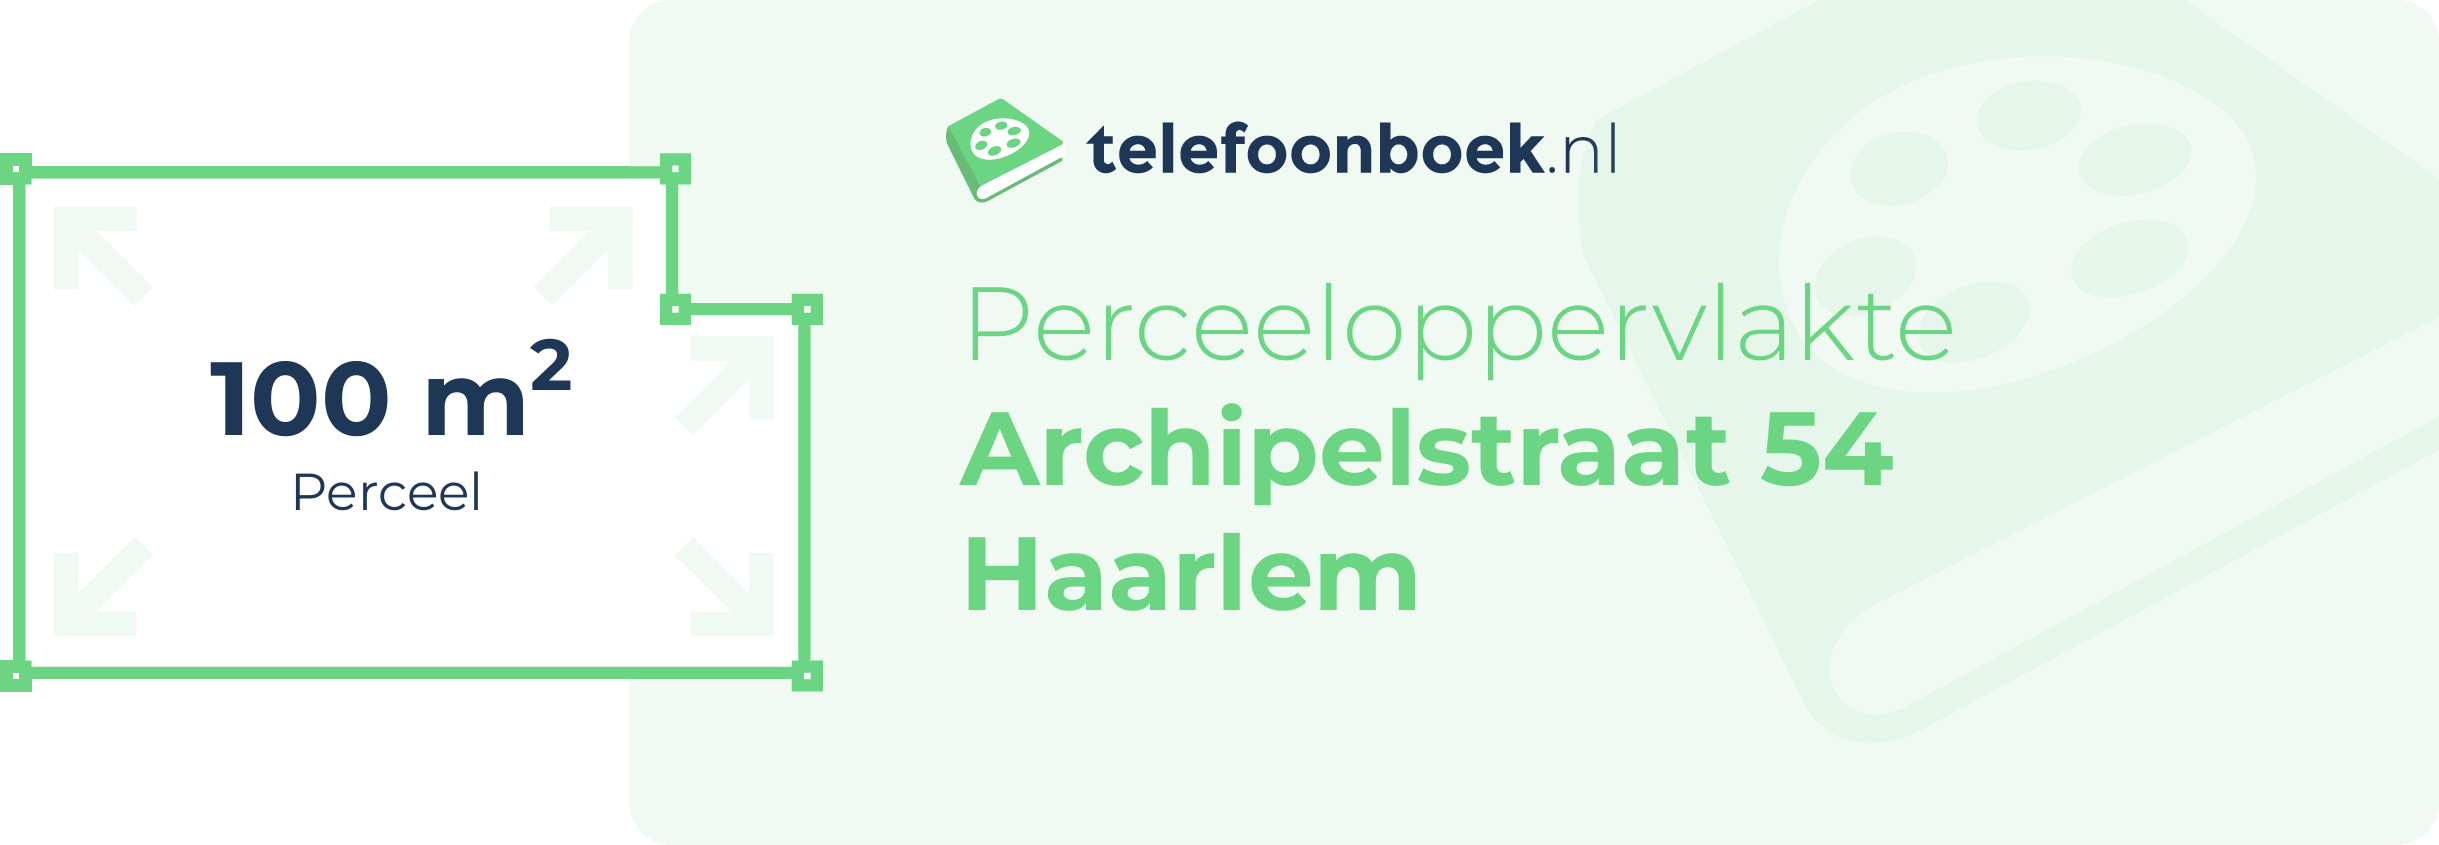 Perceeloppervlakte Archipelstraat 54 Haarlem